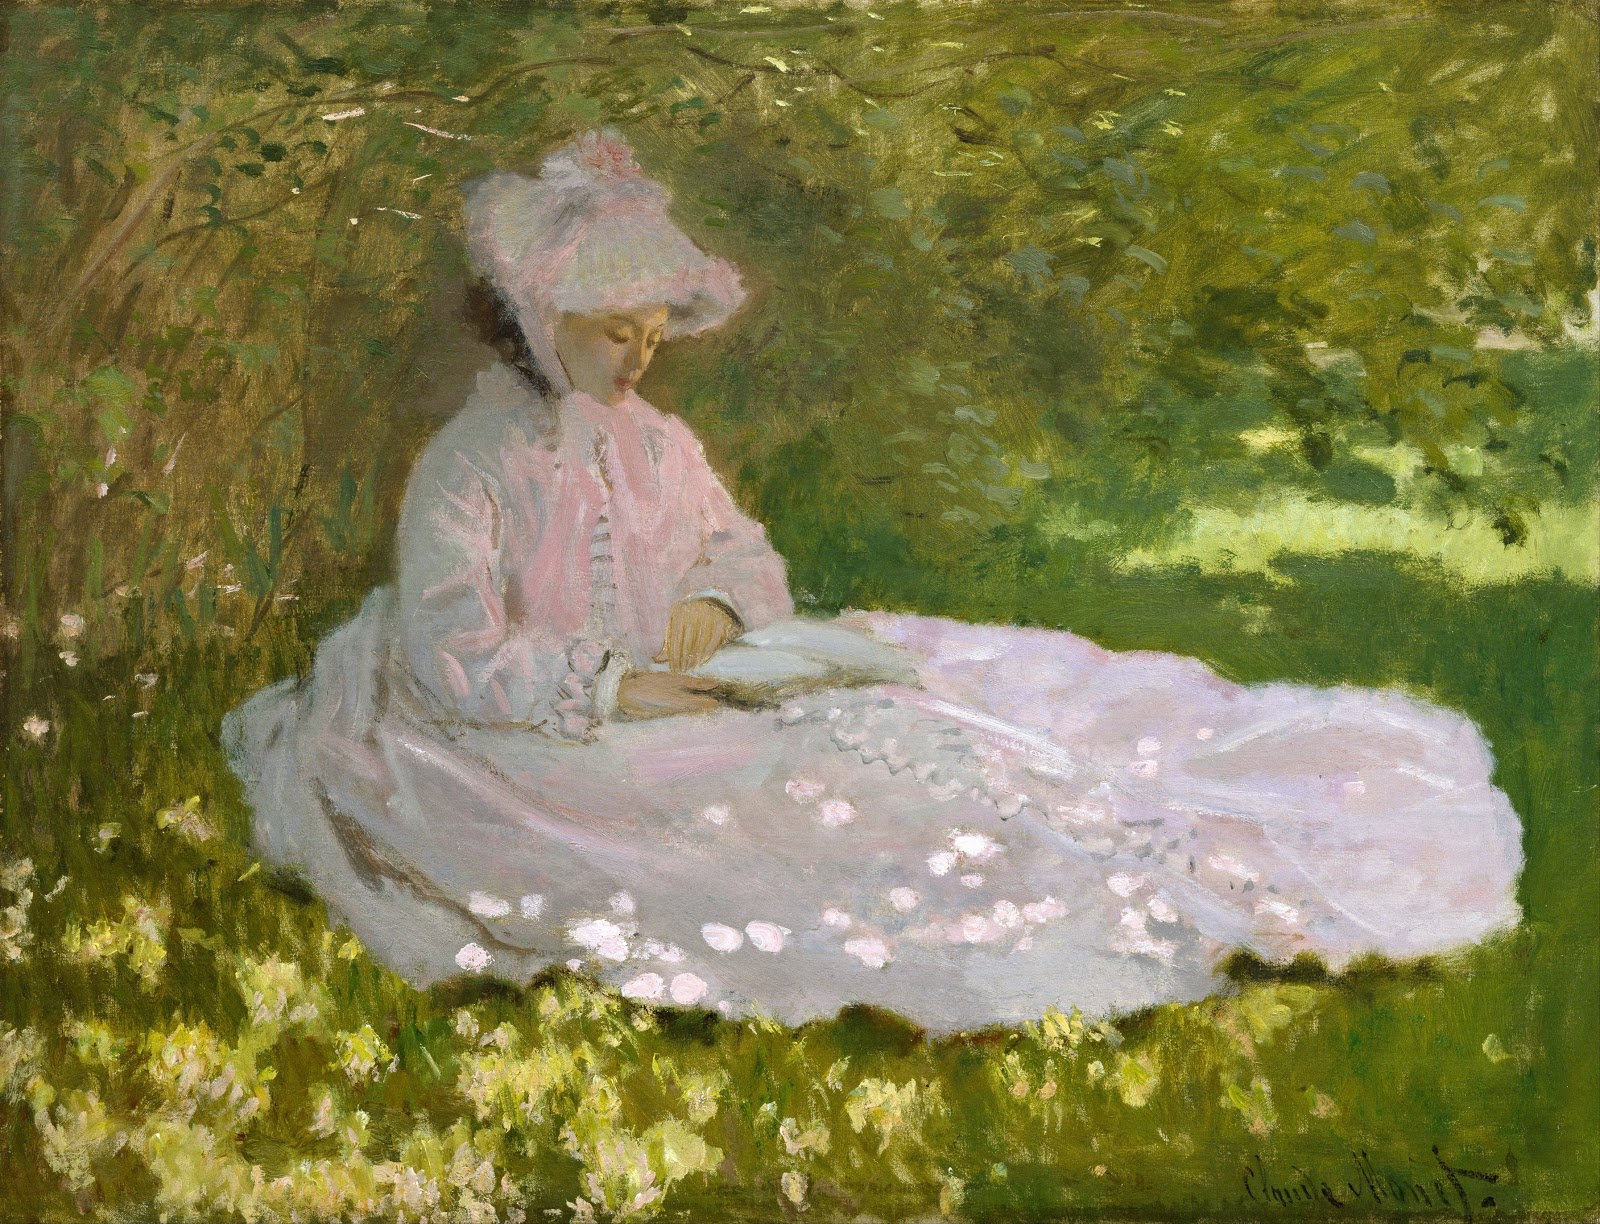 Claude+Monet-1840-1926 (174).jpg